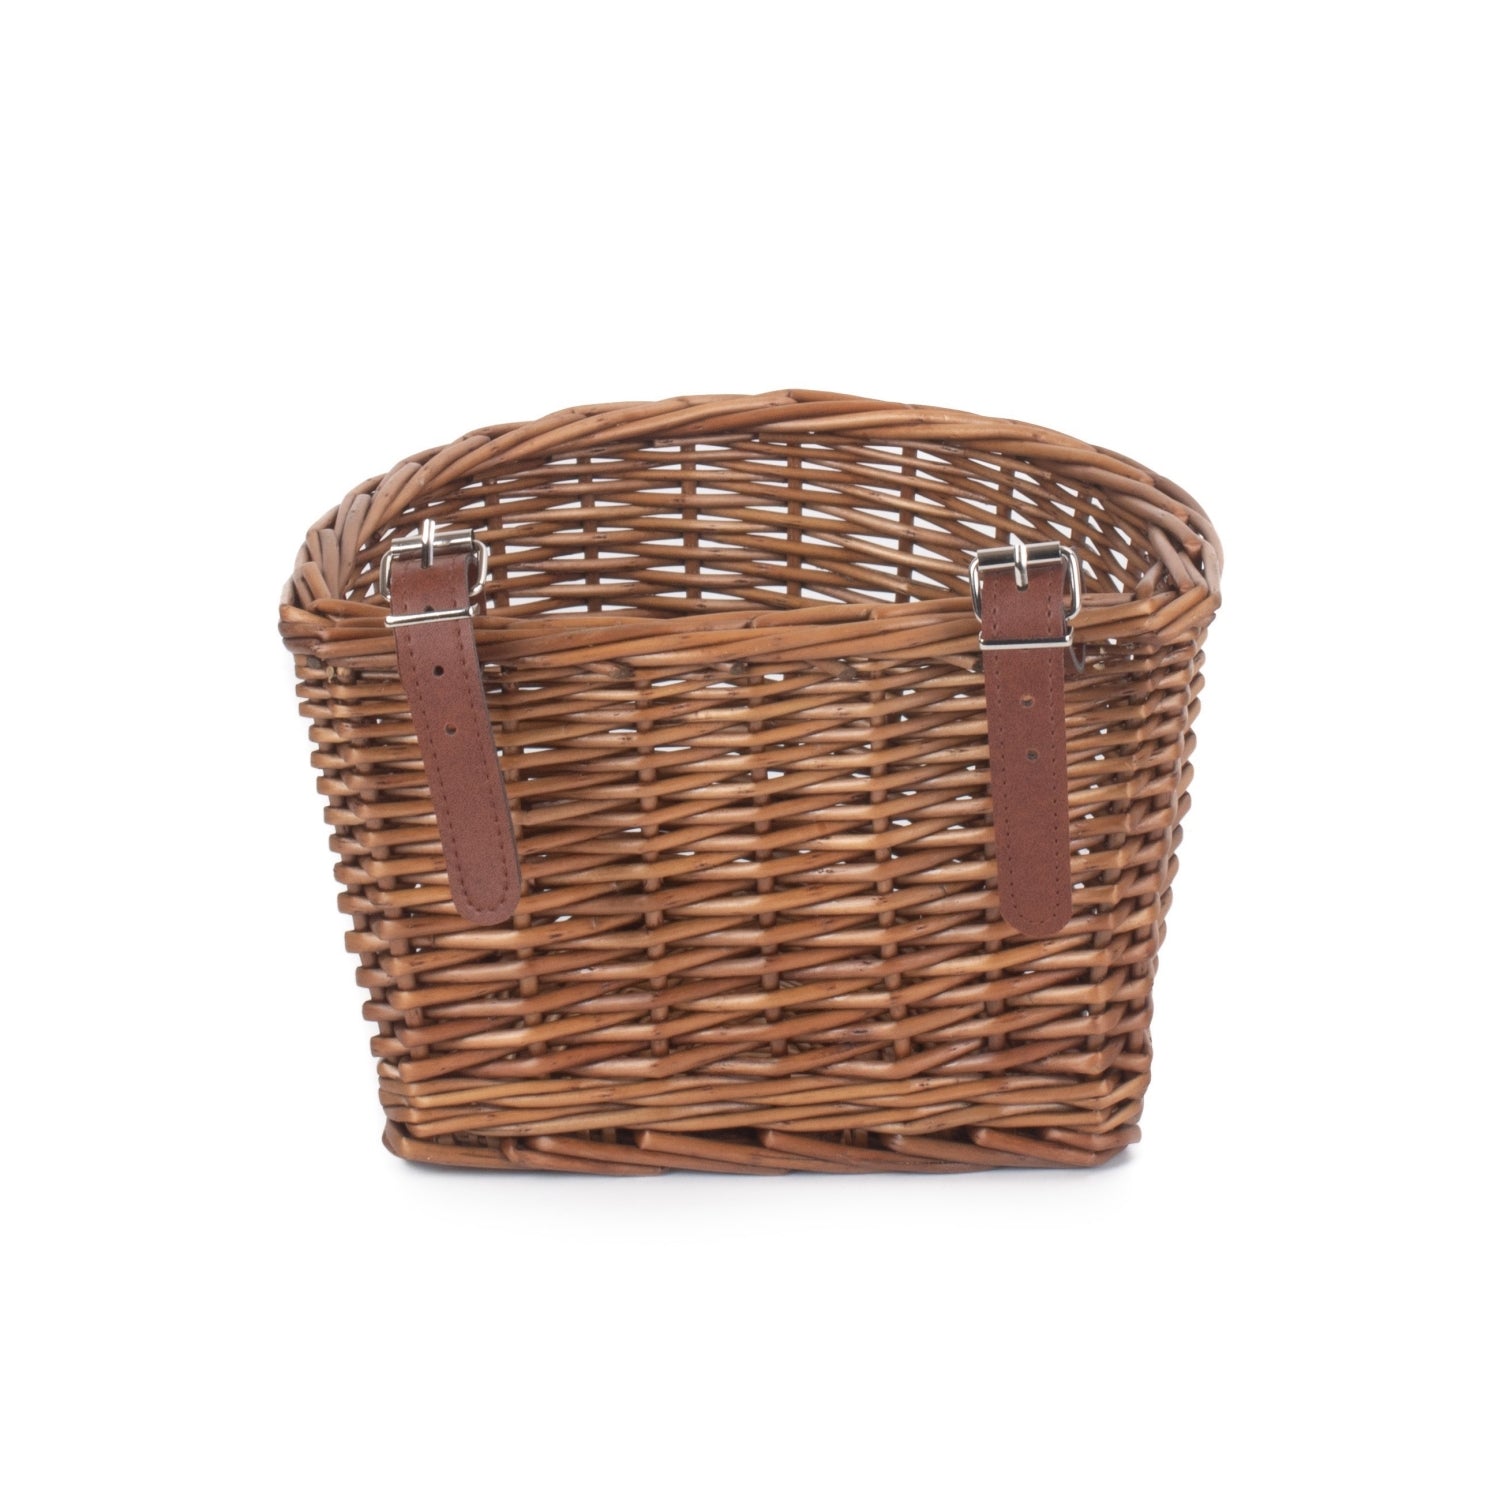 Red Hamper Wicker Child's Bicycle Basket